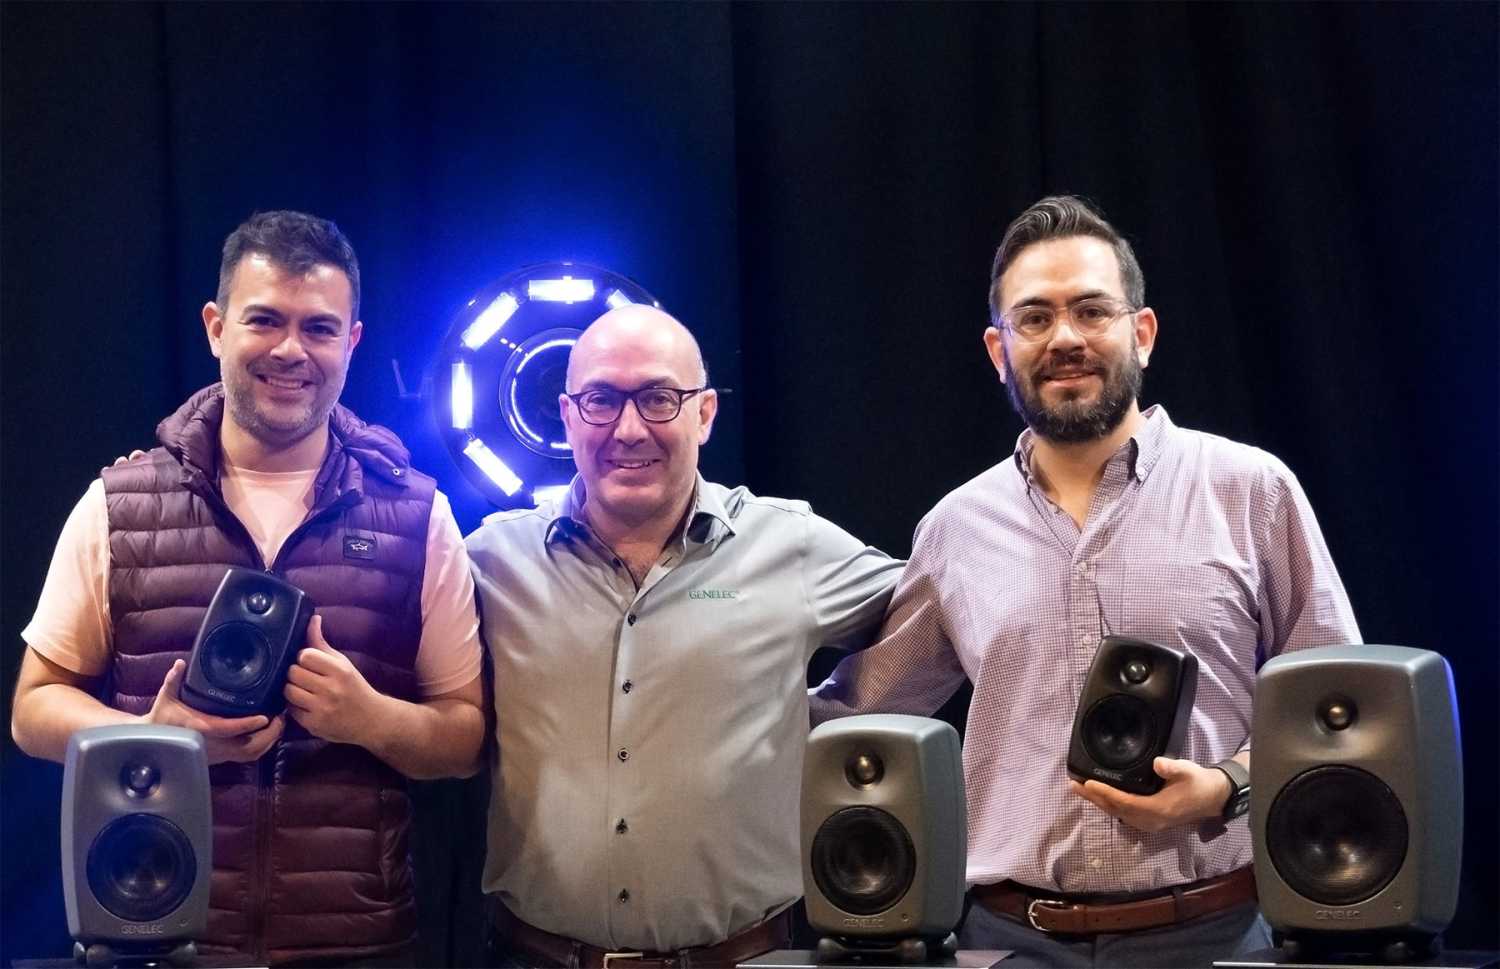 Genelec’s Miguel Dominguez (centre), pictured with Jaime Celis (left) and Alejandro Celis of Representaciones de Audio